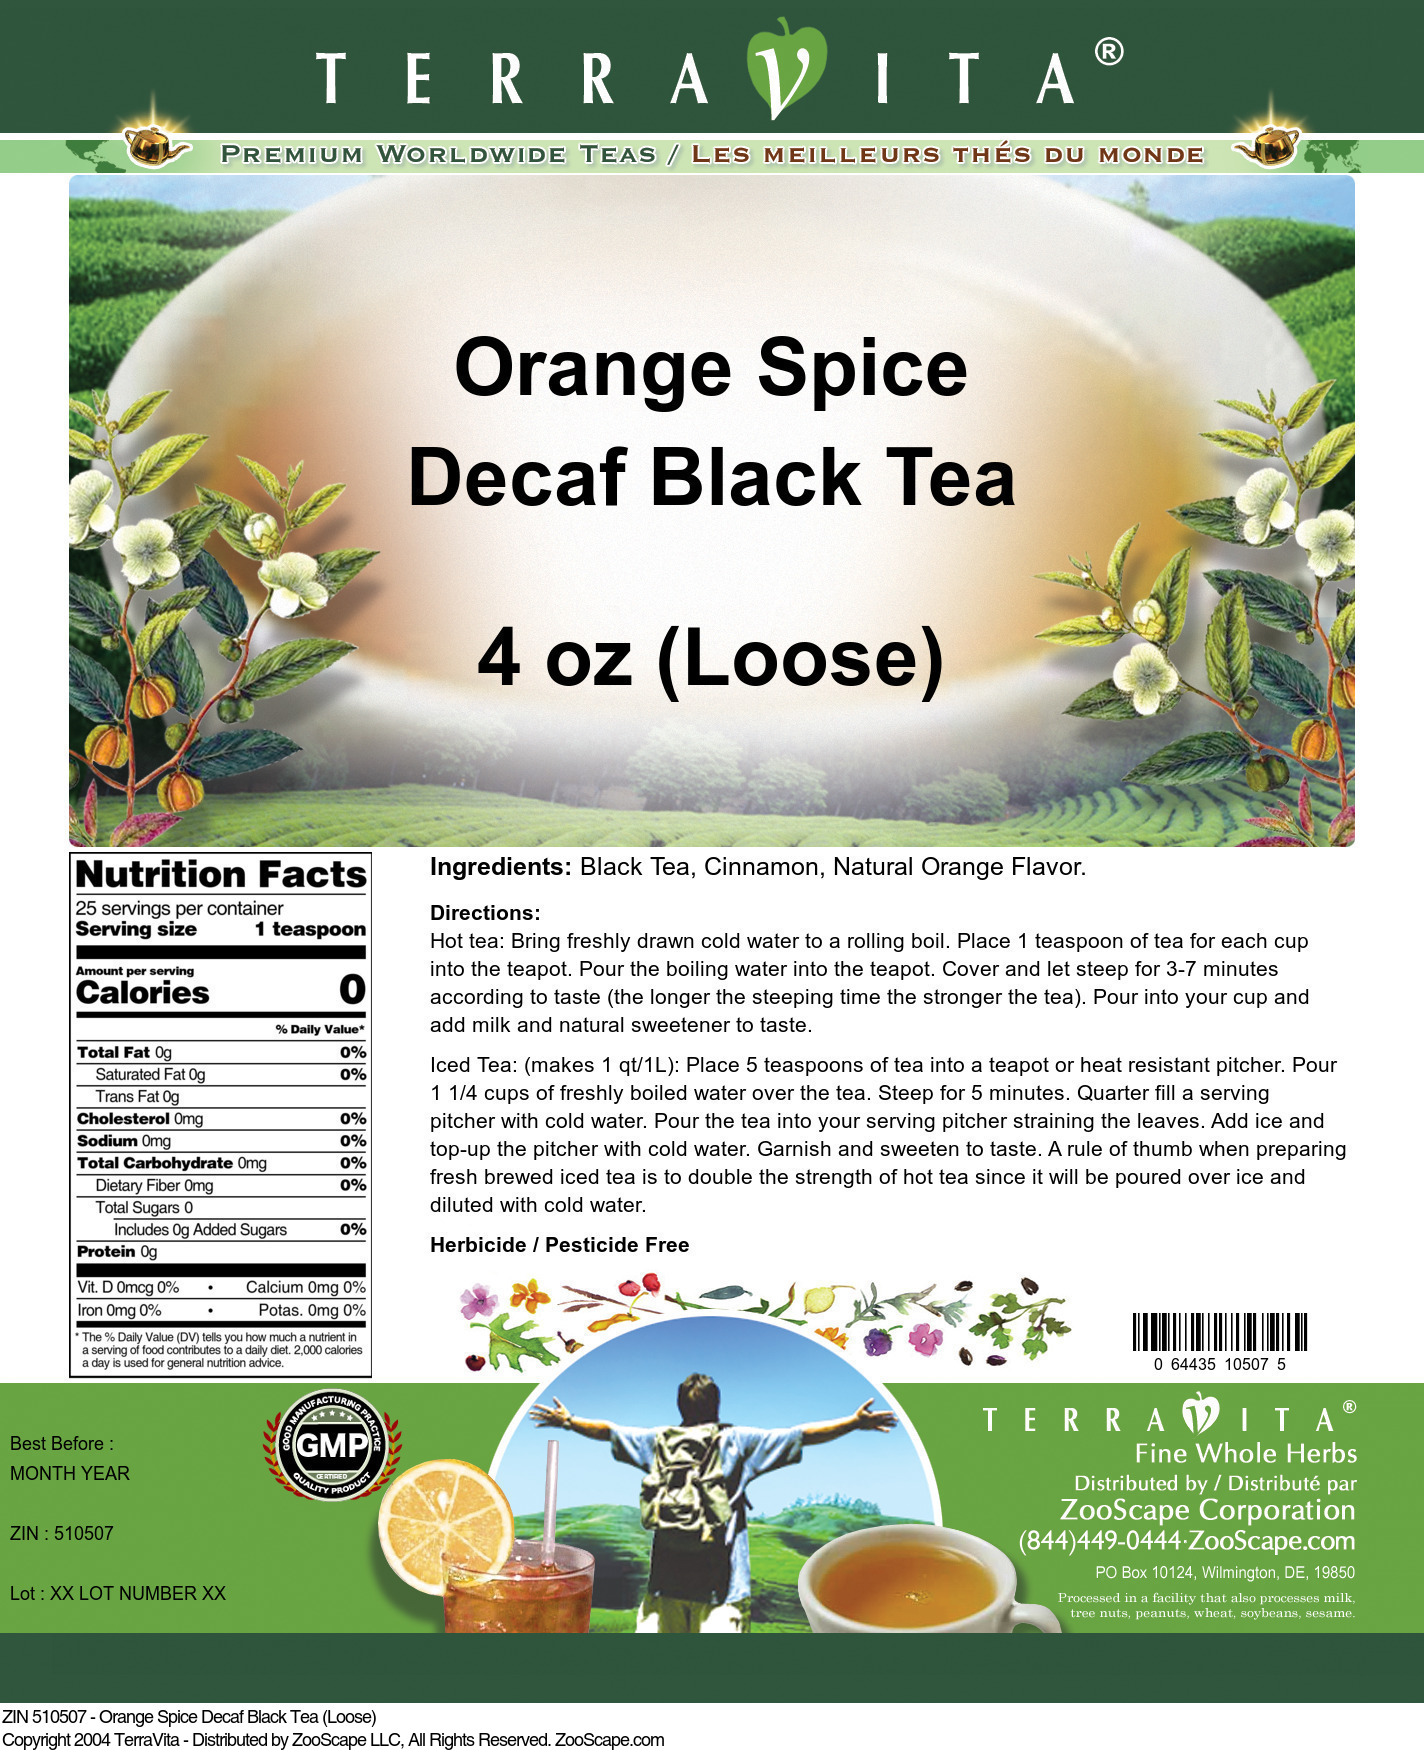 Orange Spice Decaf Black Tea (Loose) - Label